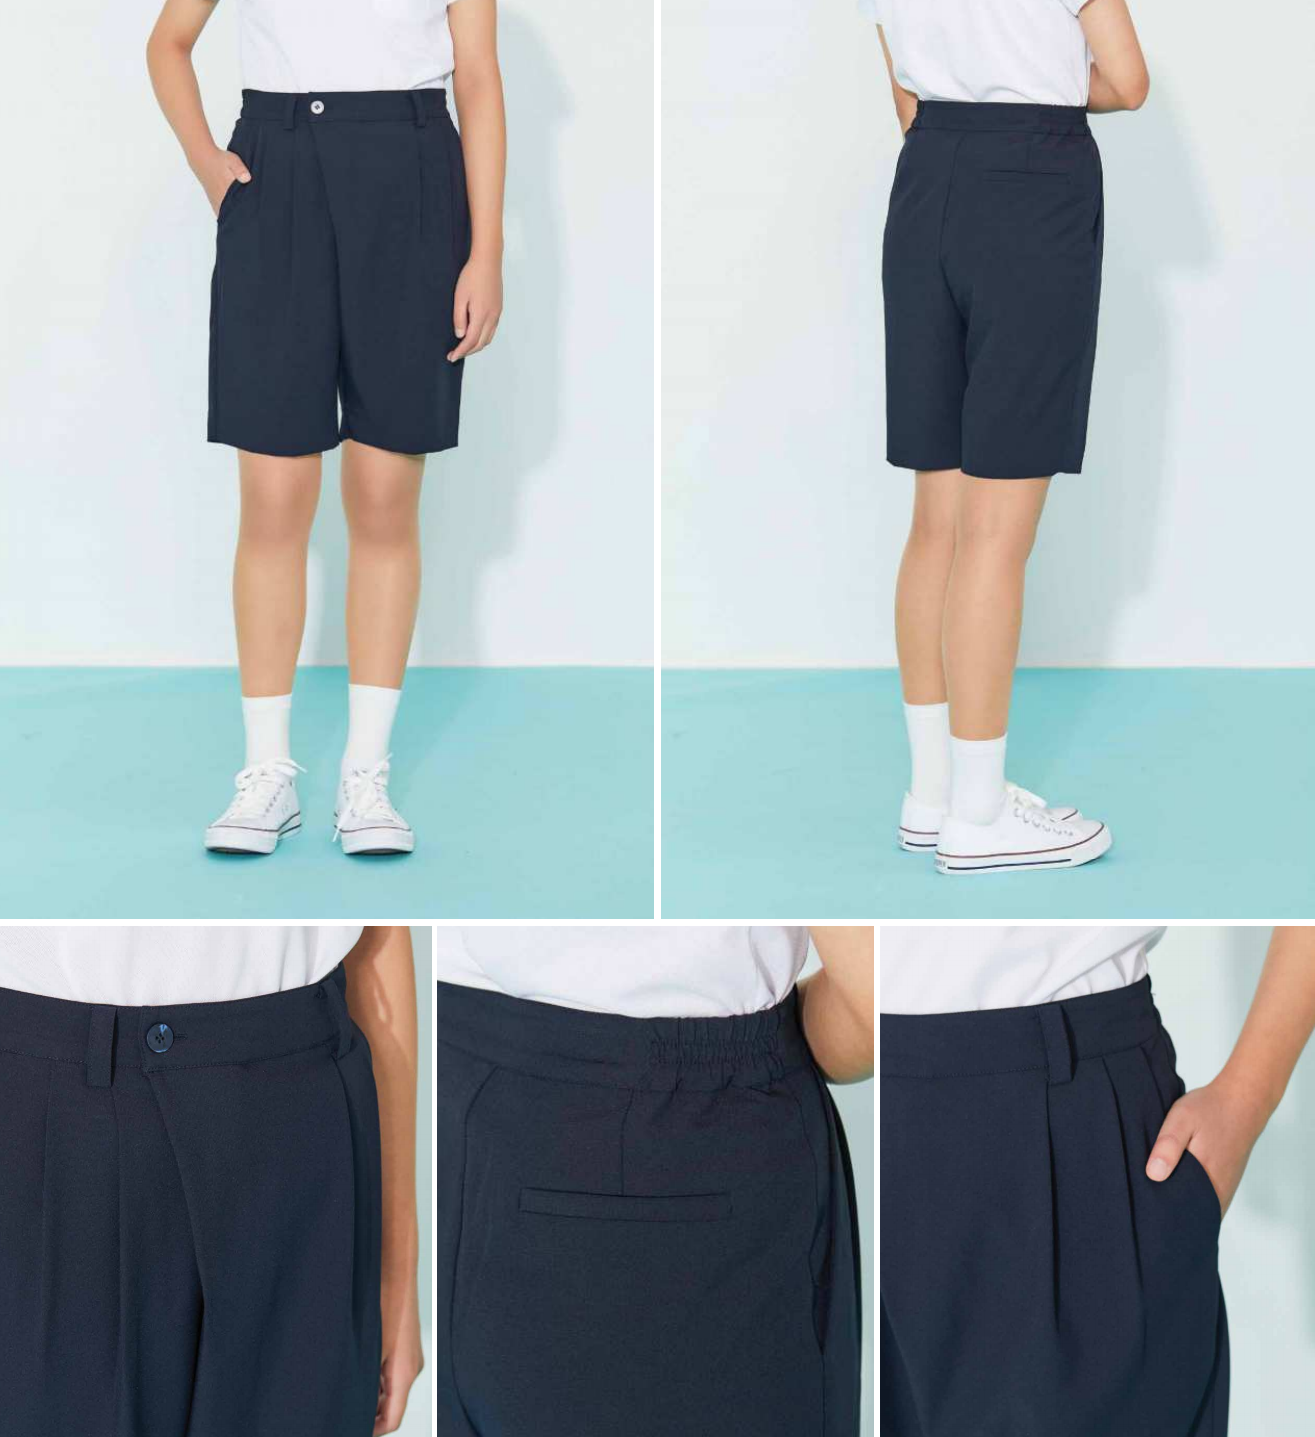 Hanbok Uniforms - Women's active wear shorts